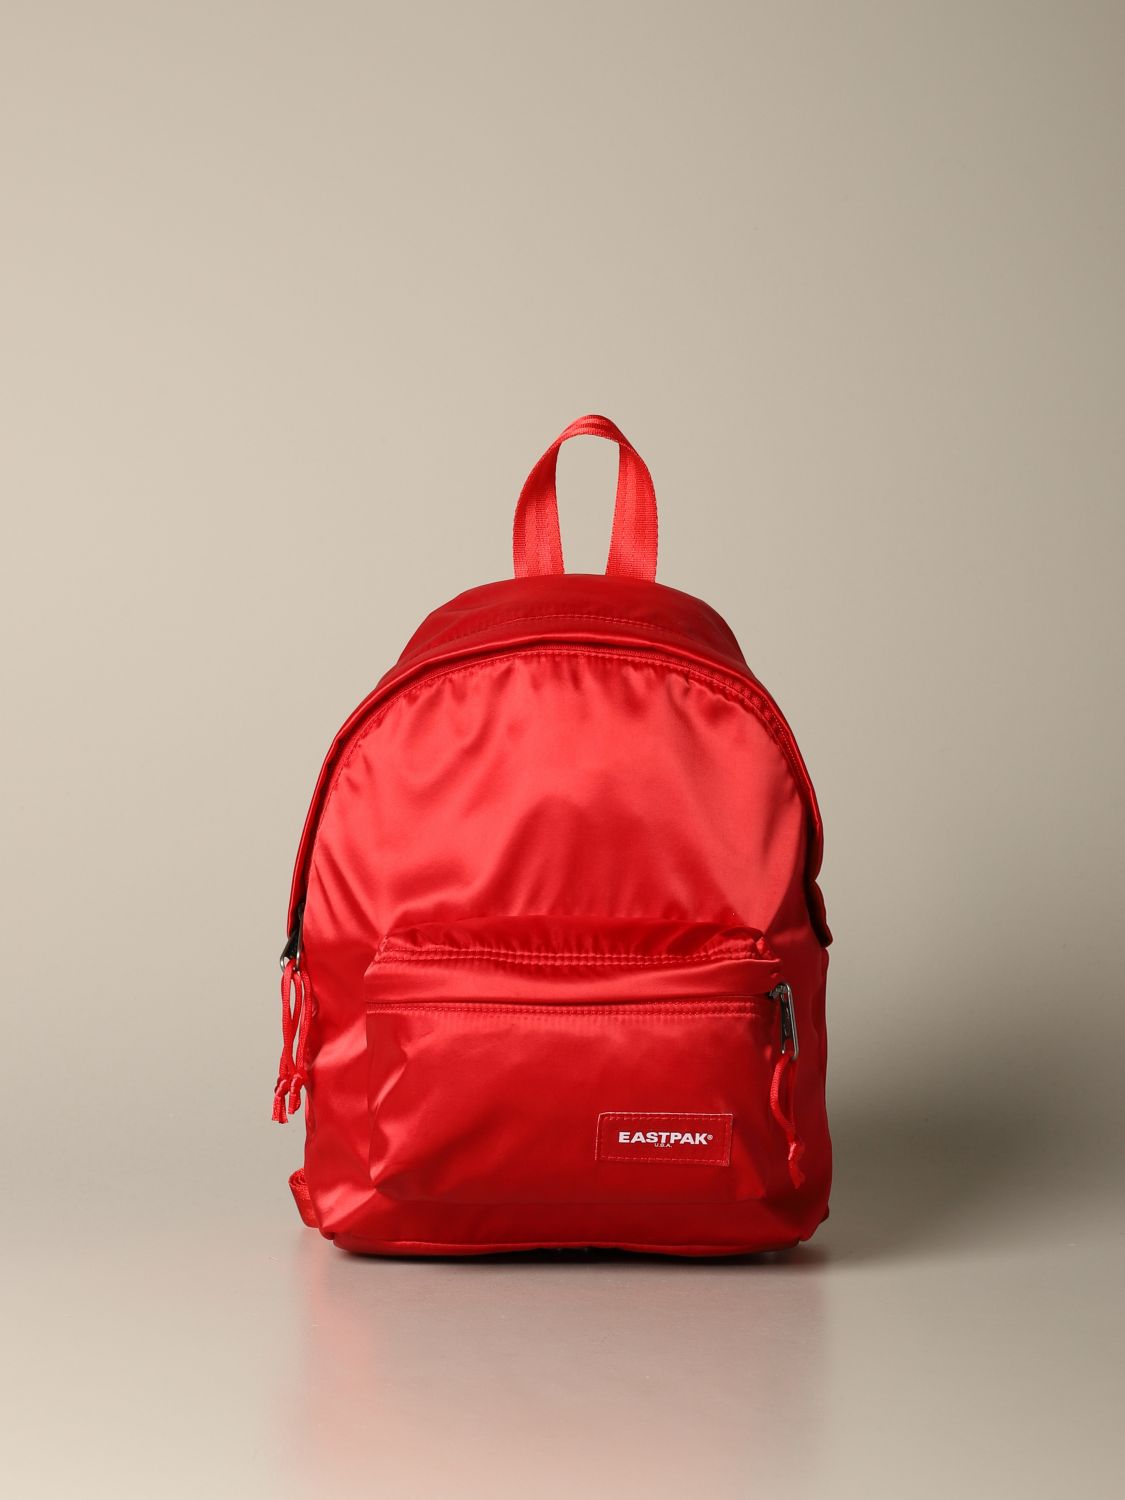 abortus diepvries Spoedig Eastpak Outlet: backpack for woman - Red | Eastpak backpack EK043 online on  GIGLIO.COM